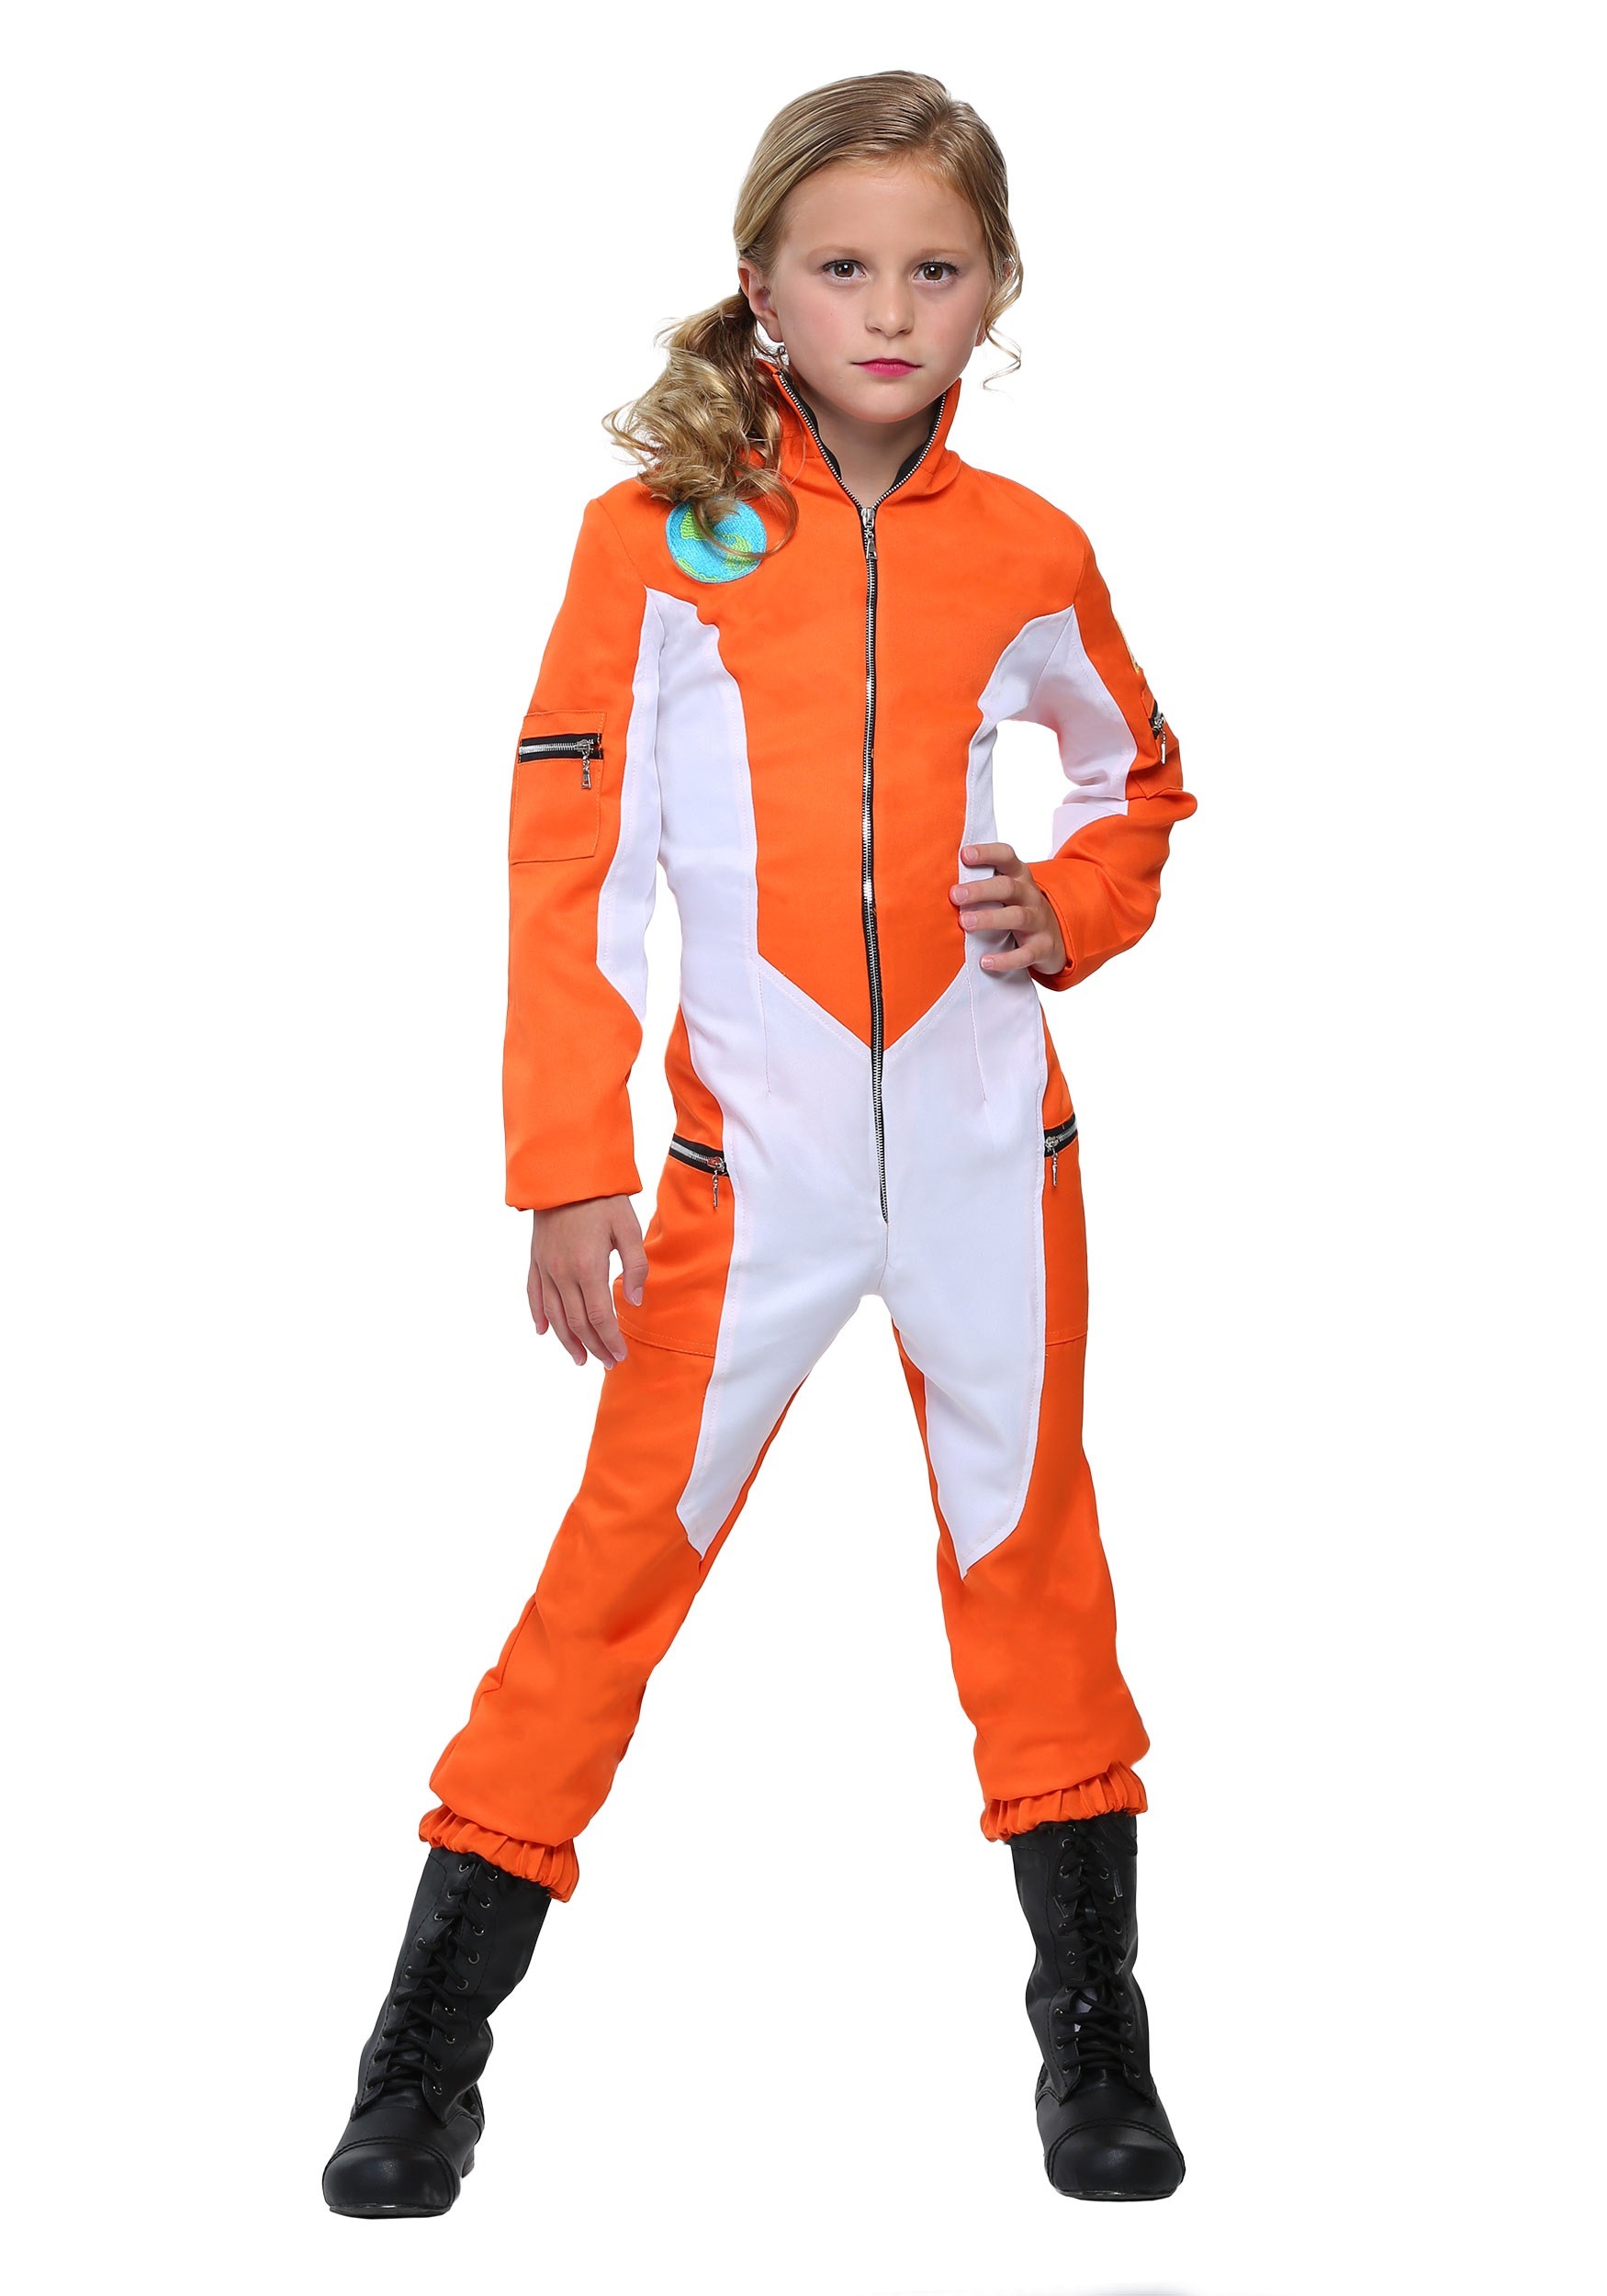 Photos - Fancy Dress FUN Costumes Girls Astronaut Jumpsuit Costume Orange/White FUN1878CH